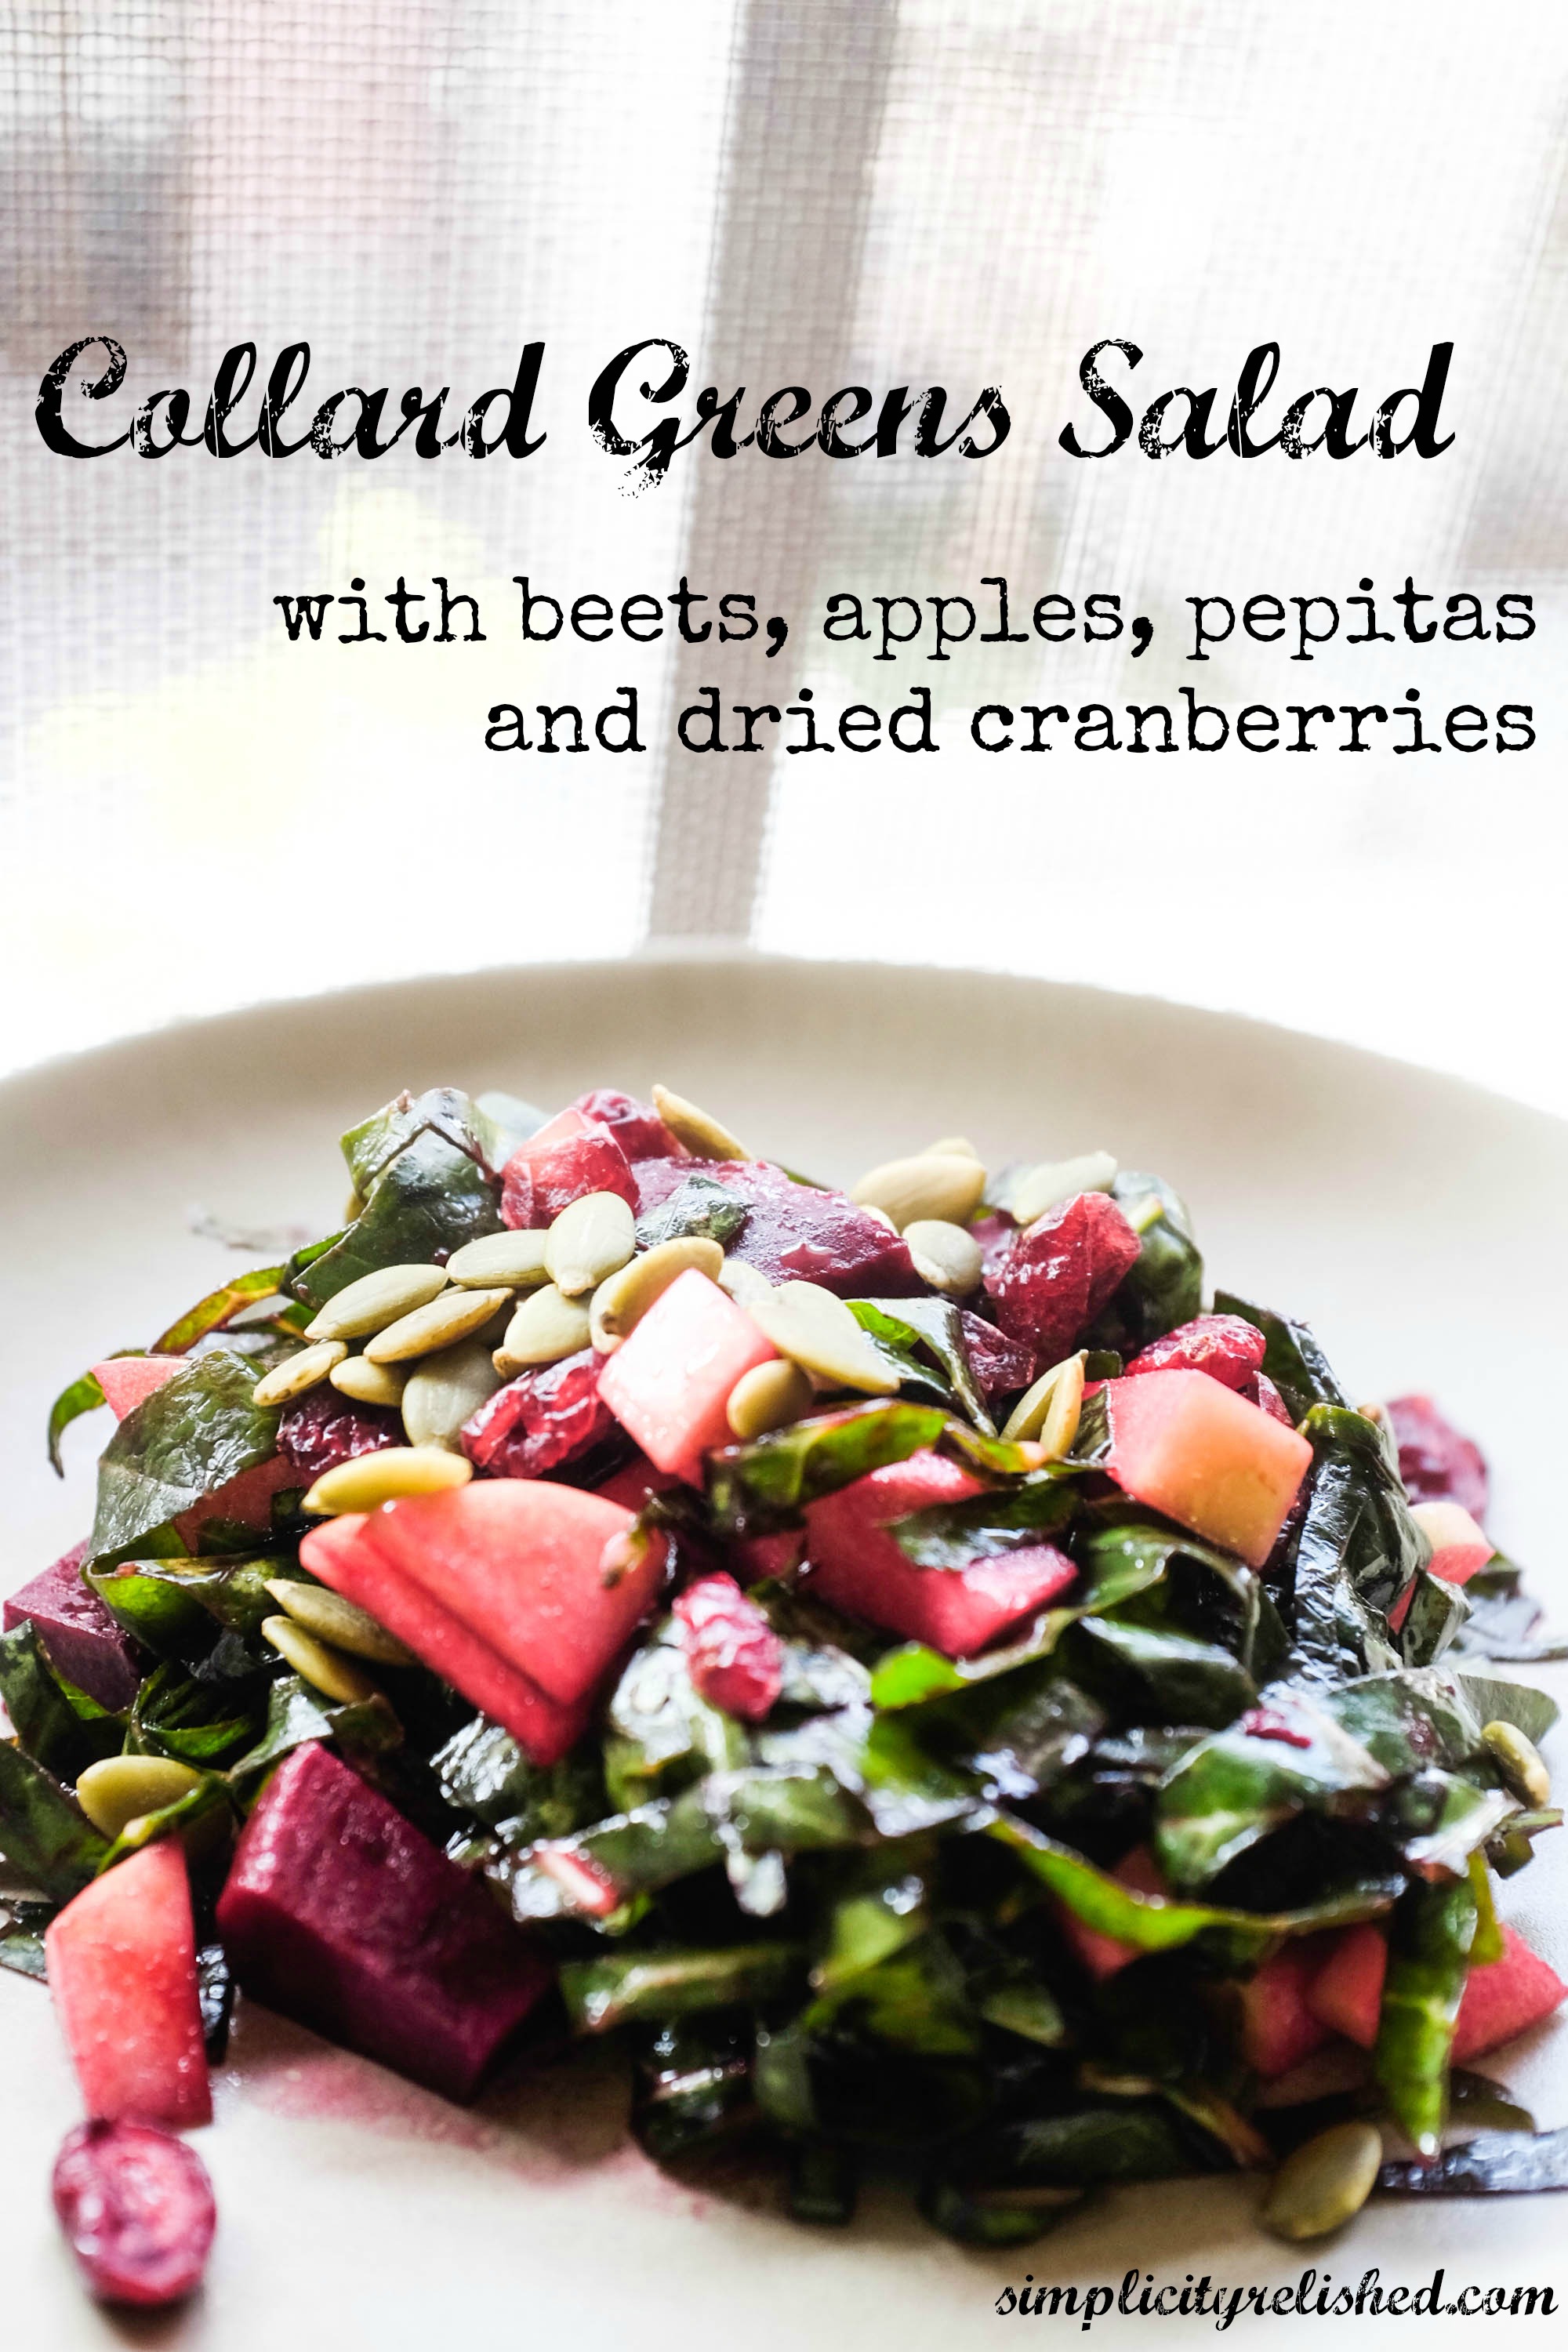 https://simplicityrelished.com/wp-content/uploads/2015/01/Collard-Greens-Salad-with-apples-beets-and-pepitas-vegan.jpg